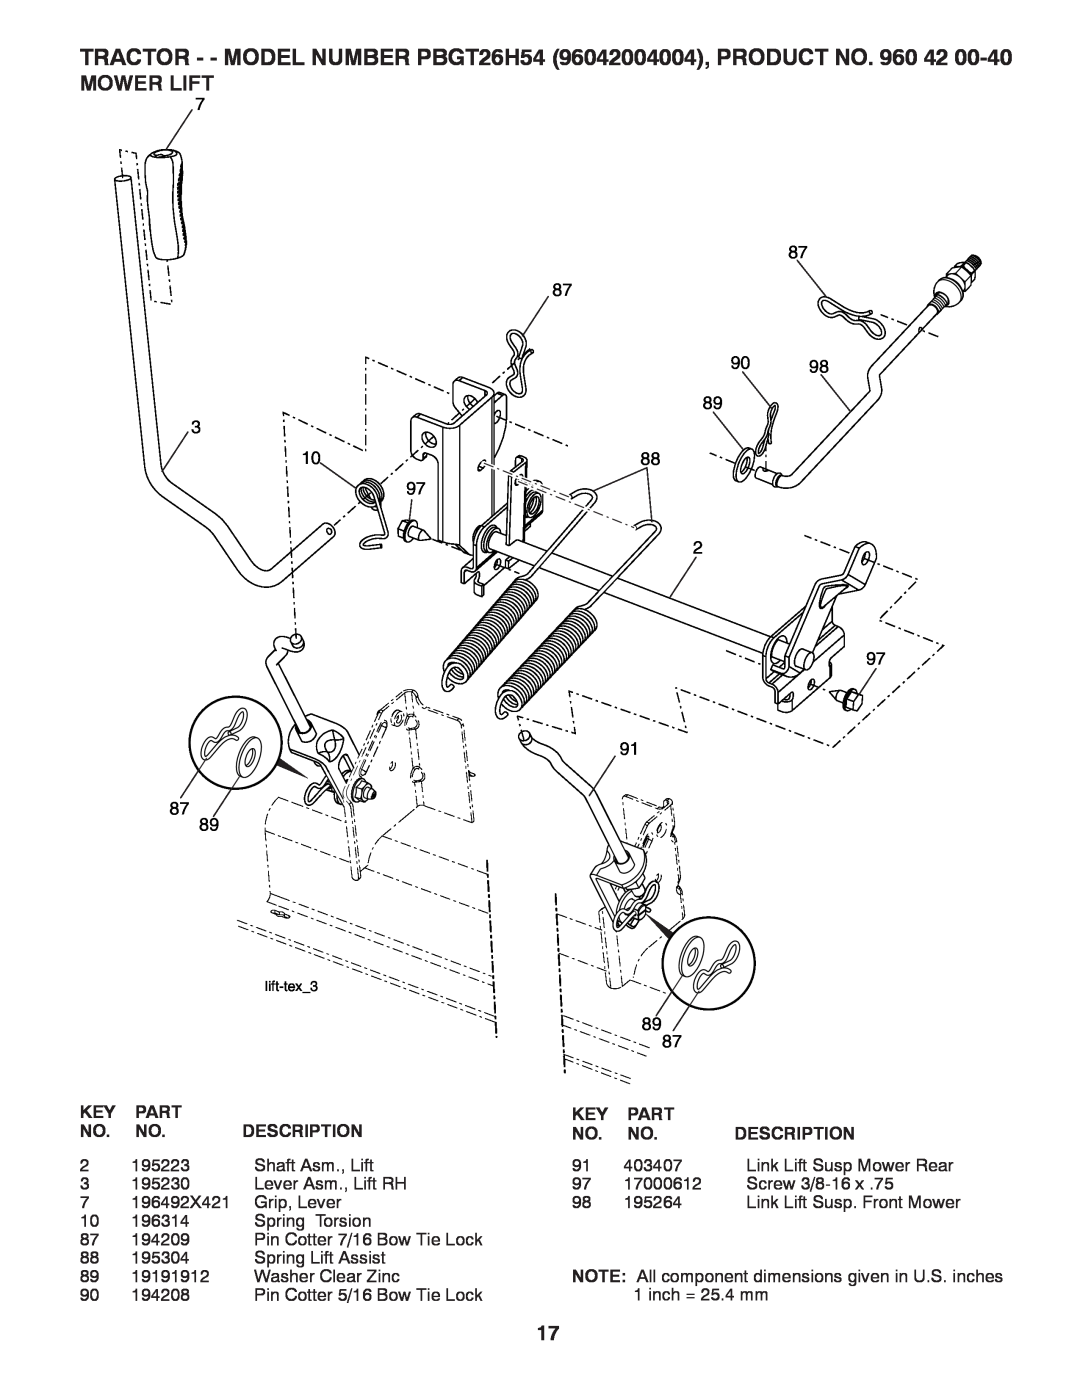 Poulan 423350 manual Mower Lift, TRACTOR - - MODEL NUMBER PBGT26H54 96042004004, PRODUCT NO. 960, lift-tex3 